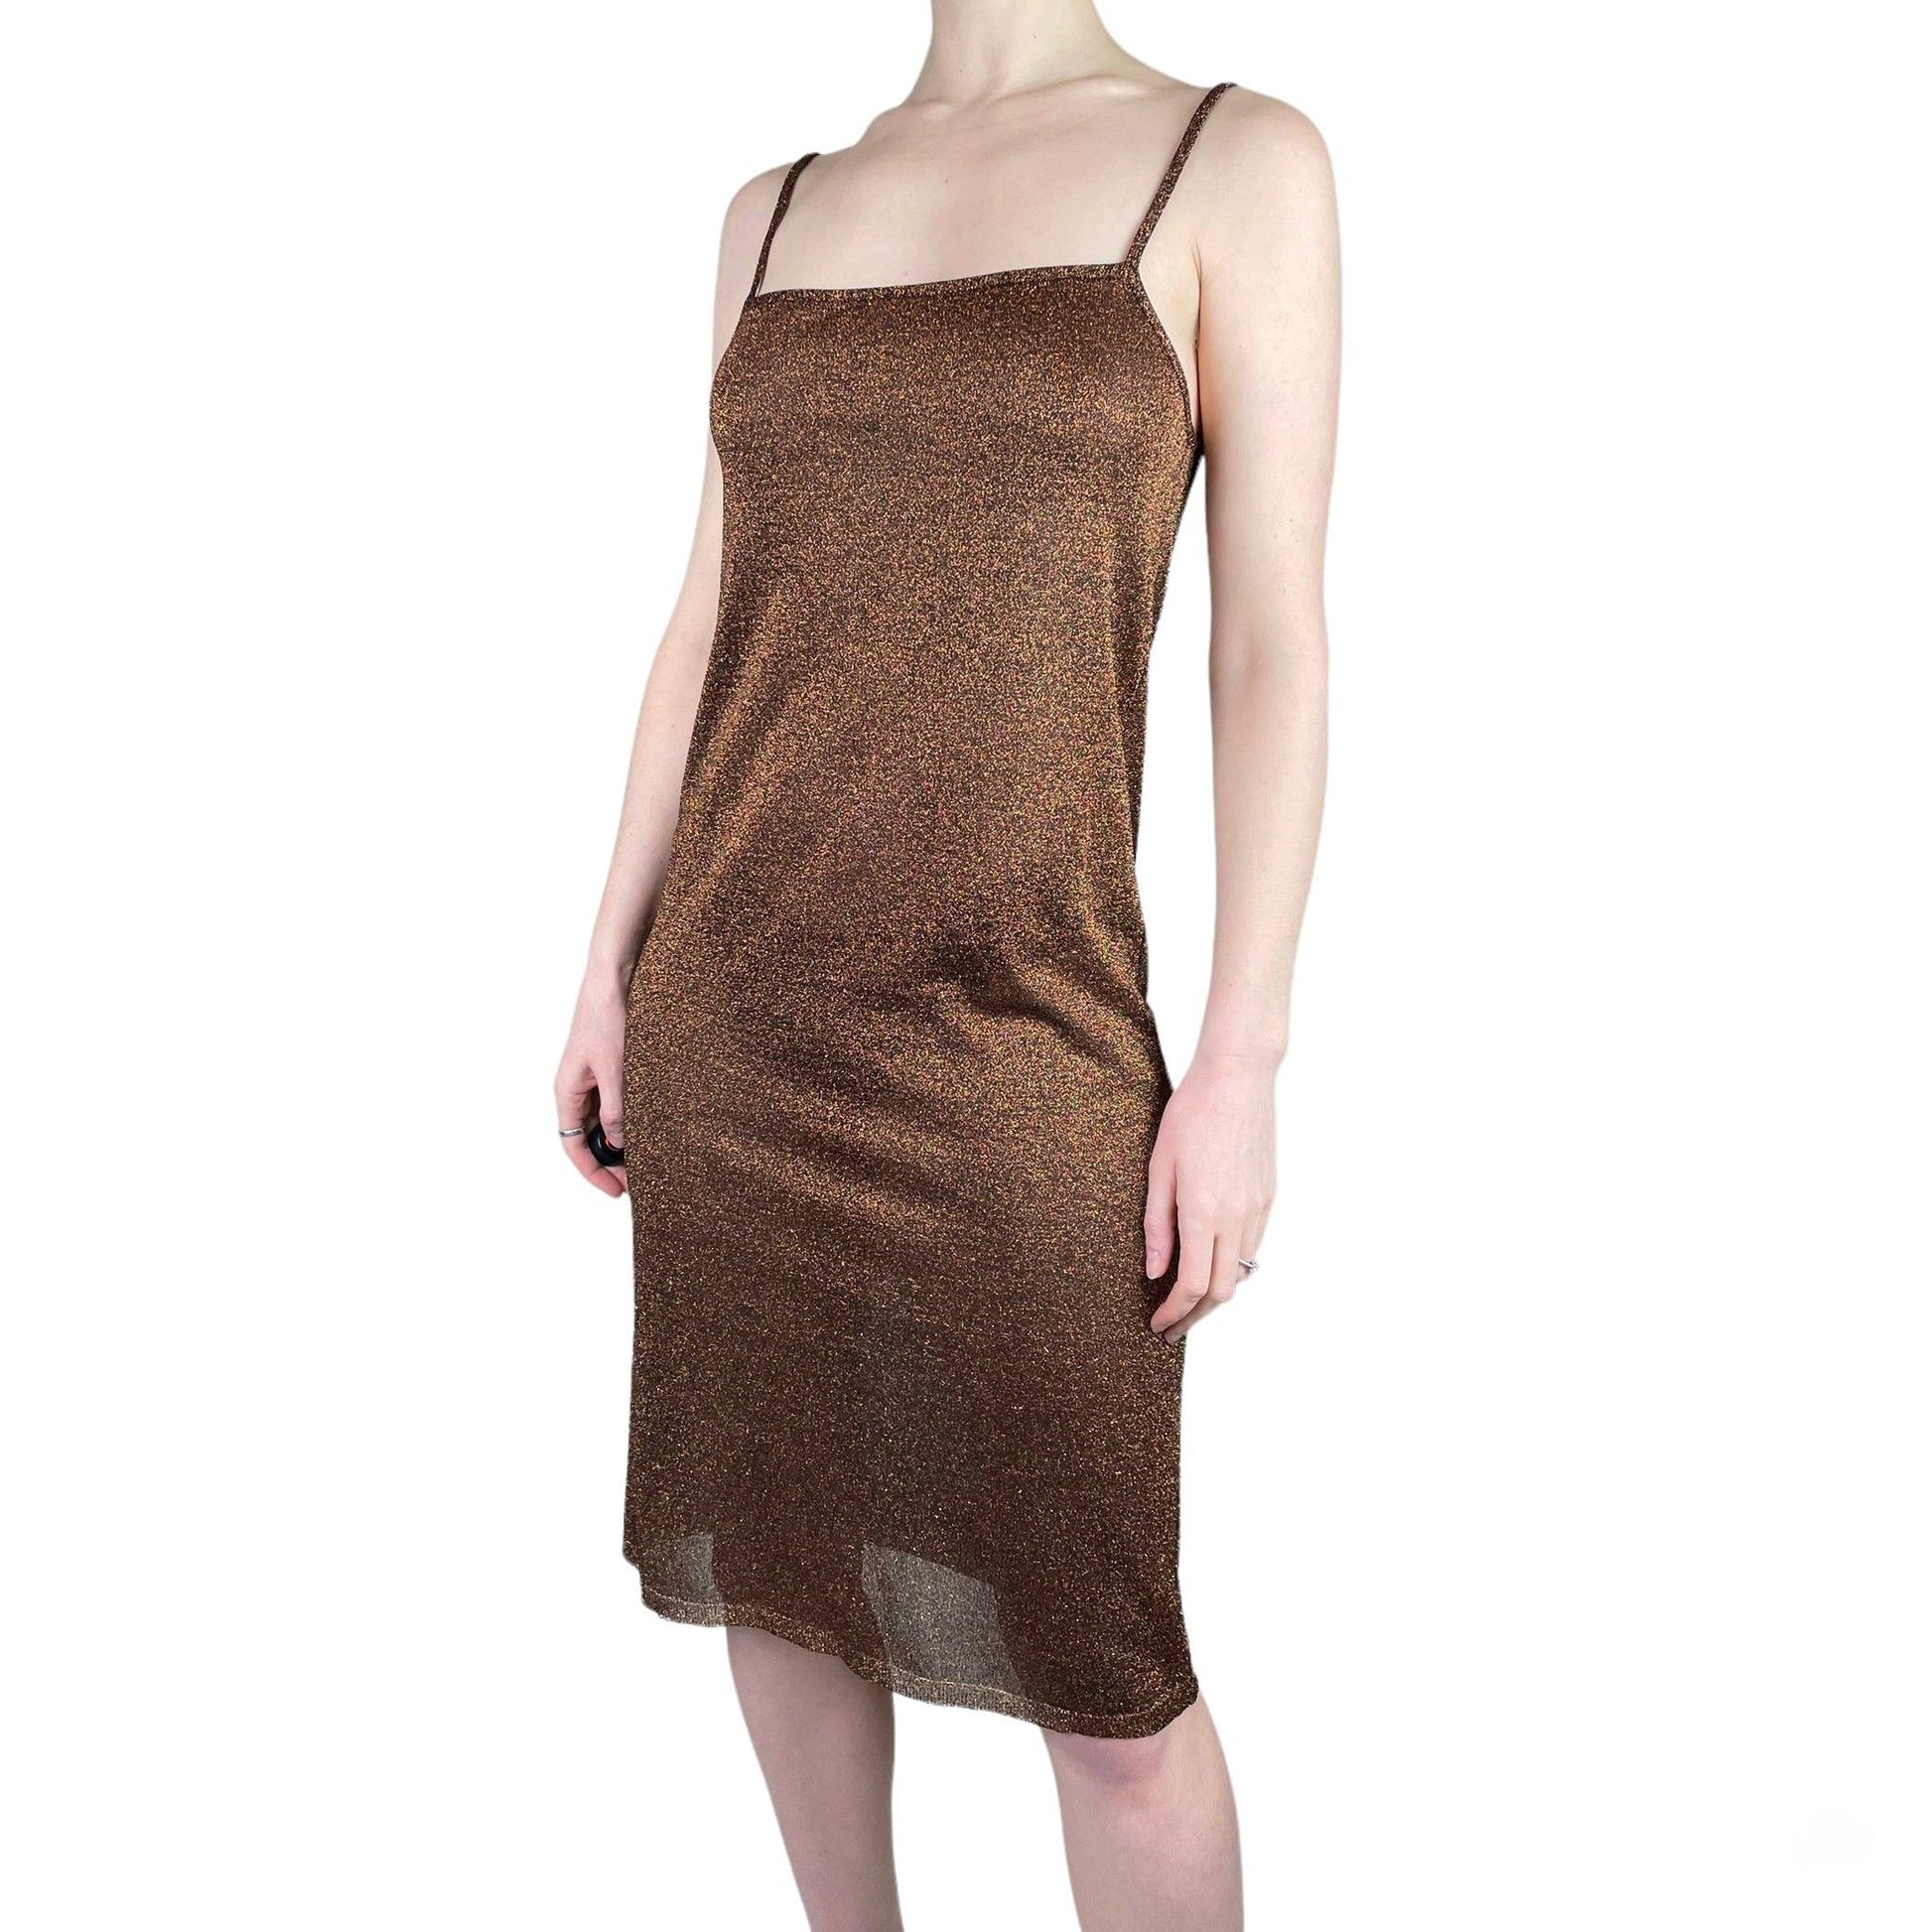 Prada 2011 copper slip dress - Known Source